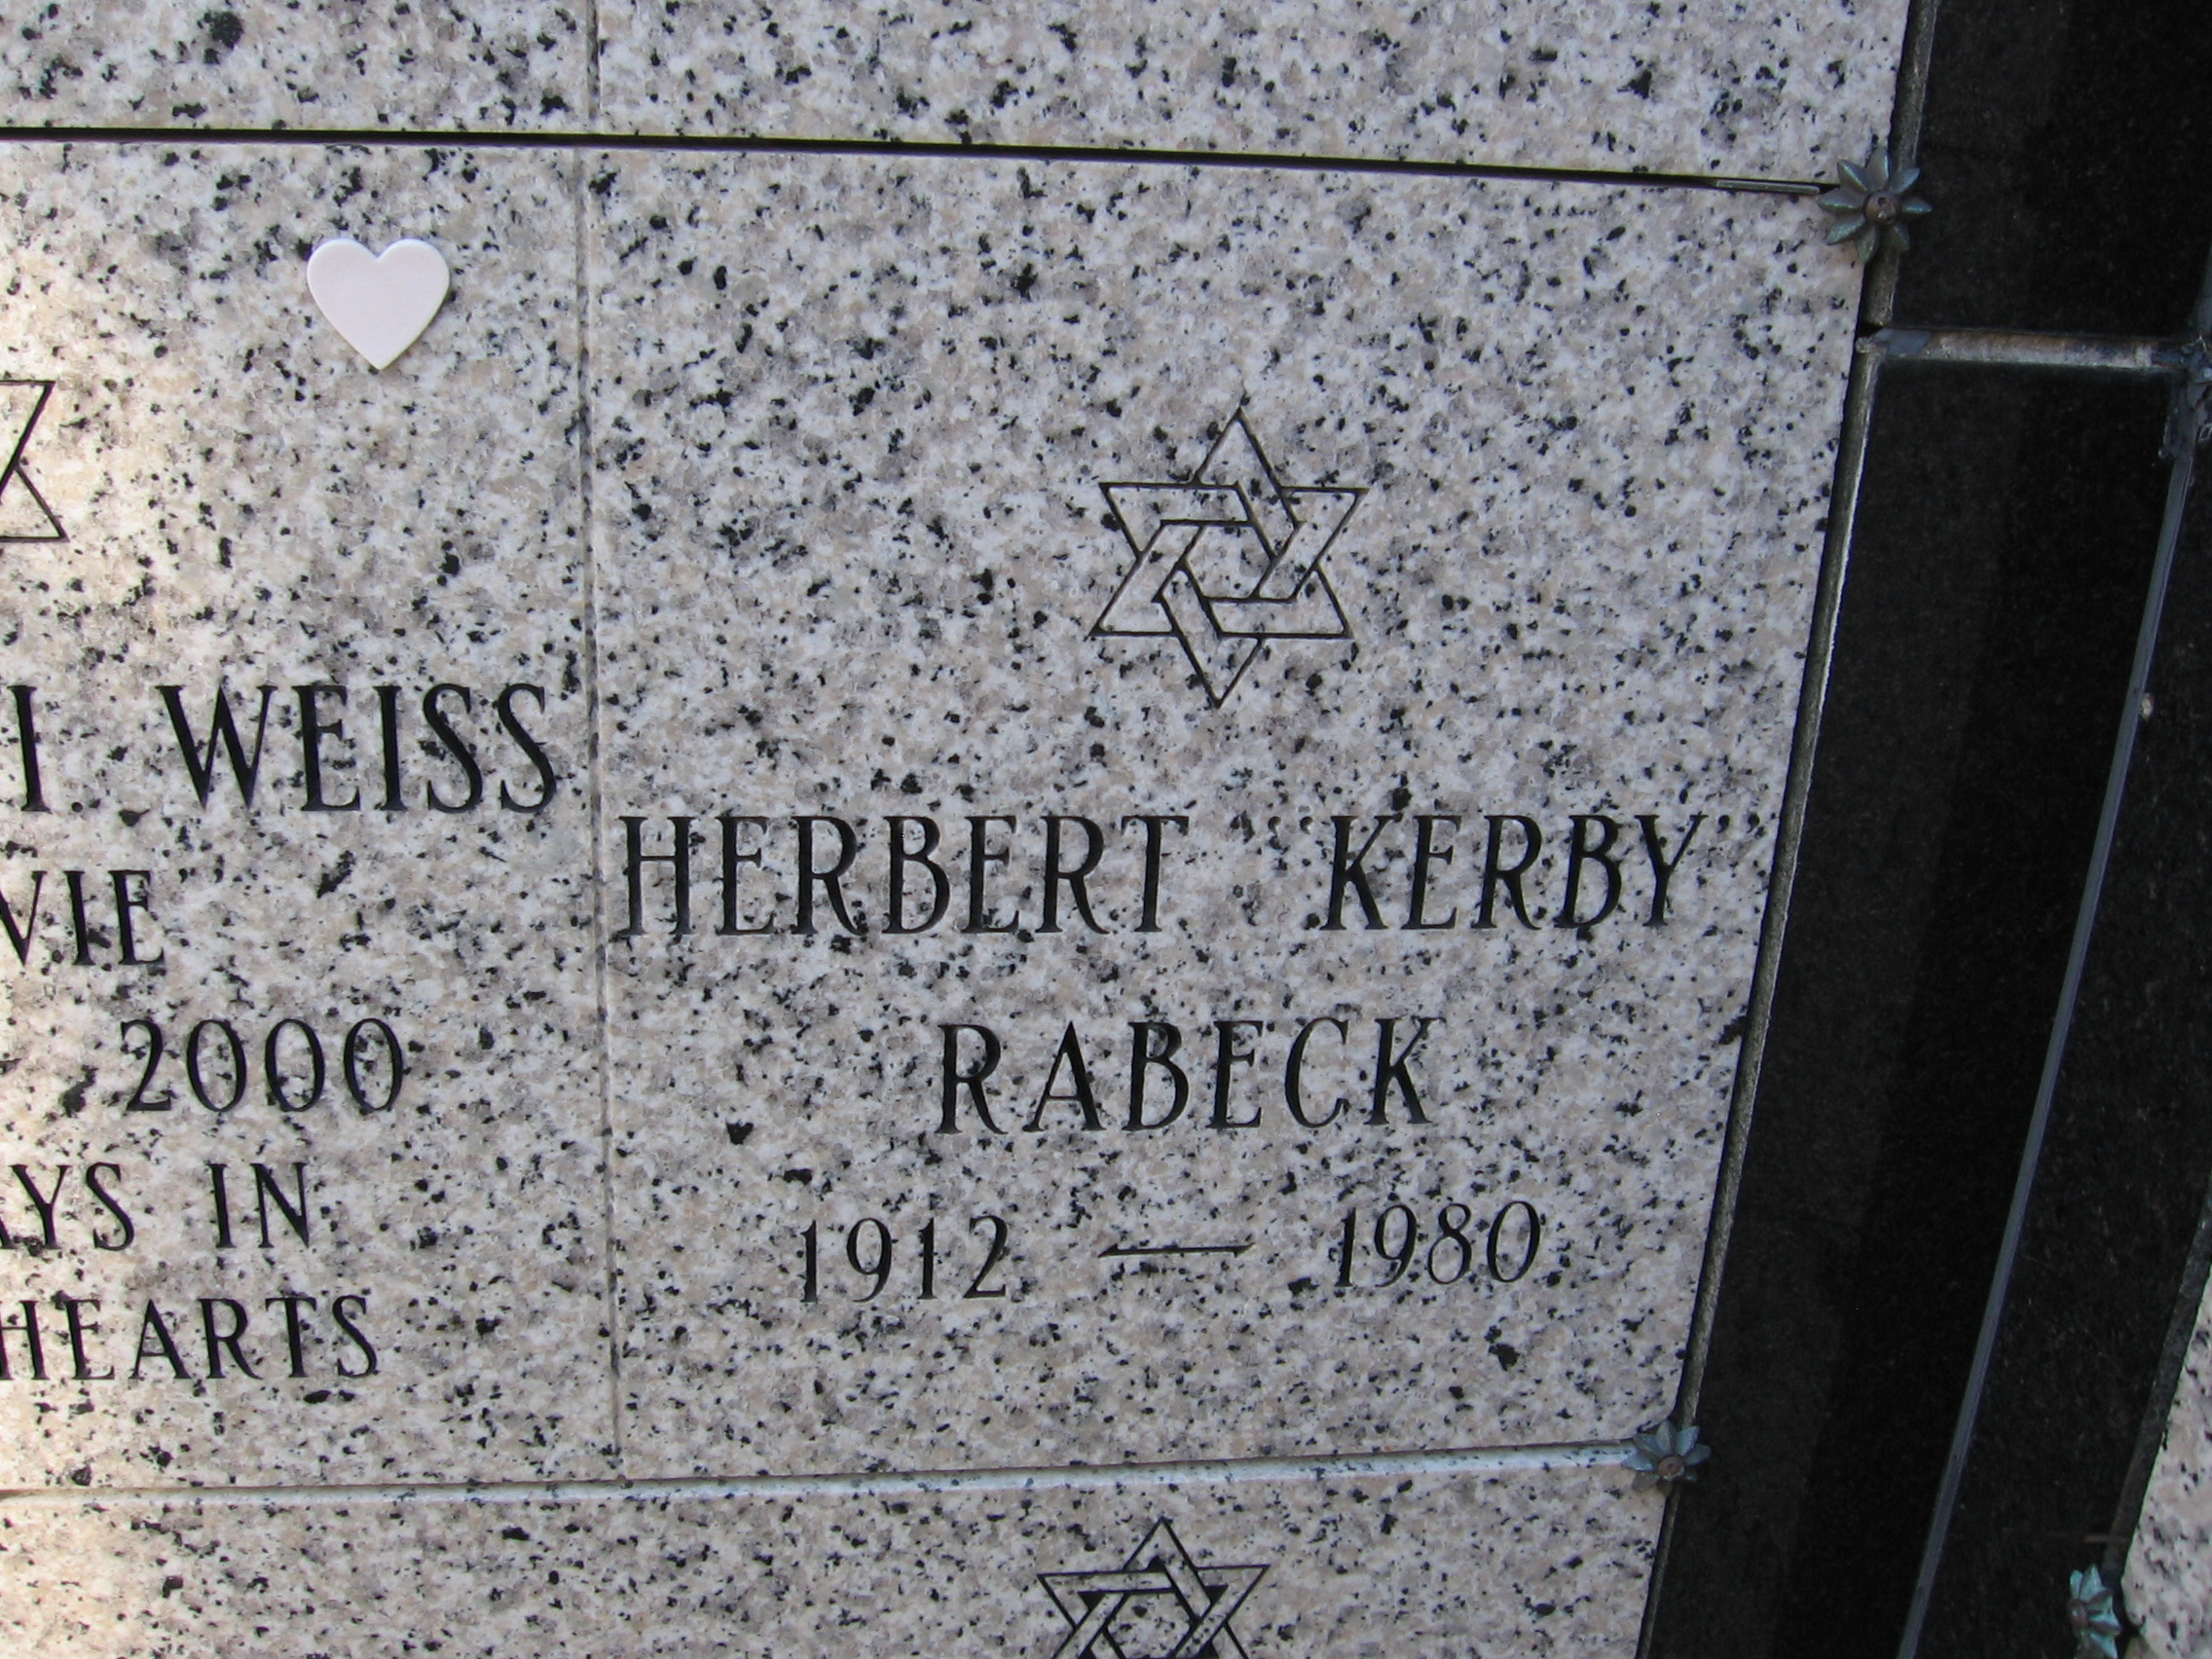 Herbert "Kerby" Rabeck